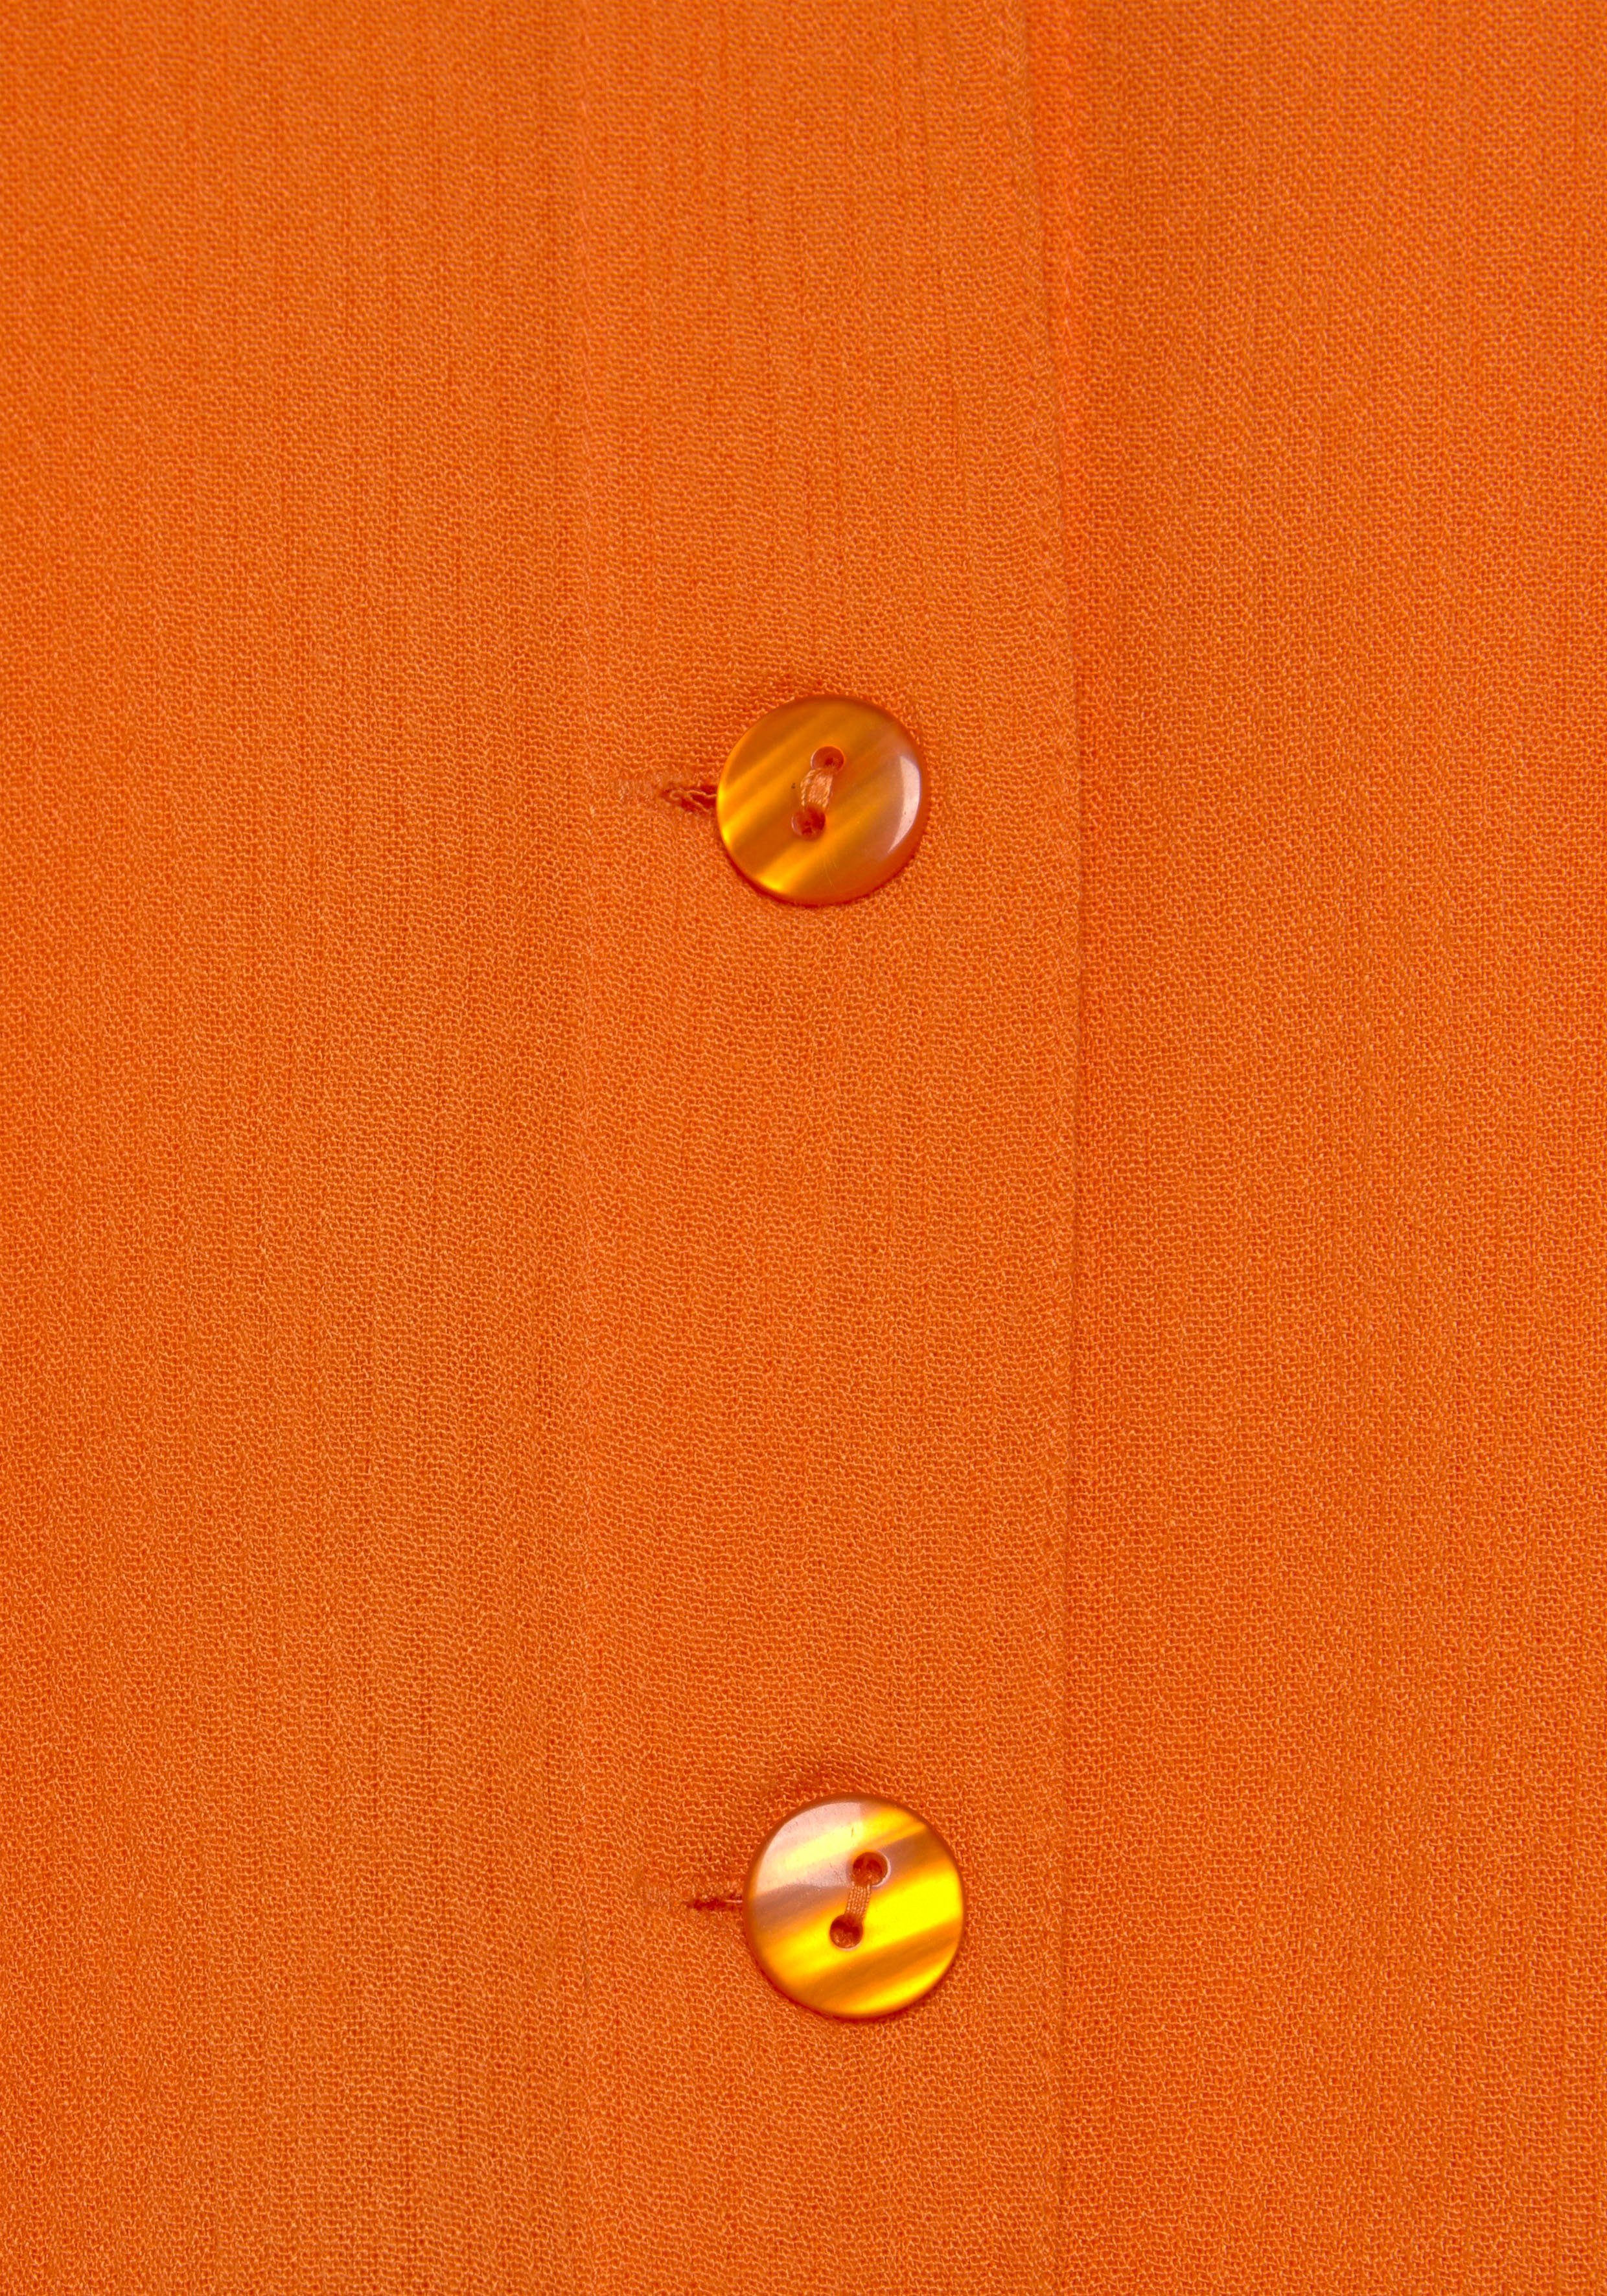 Longbluse Blusenkleid, Kurzarmbluse, mit LASCANA sommerlich orange Knopfleiste,